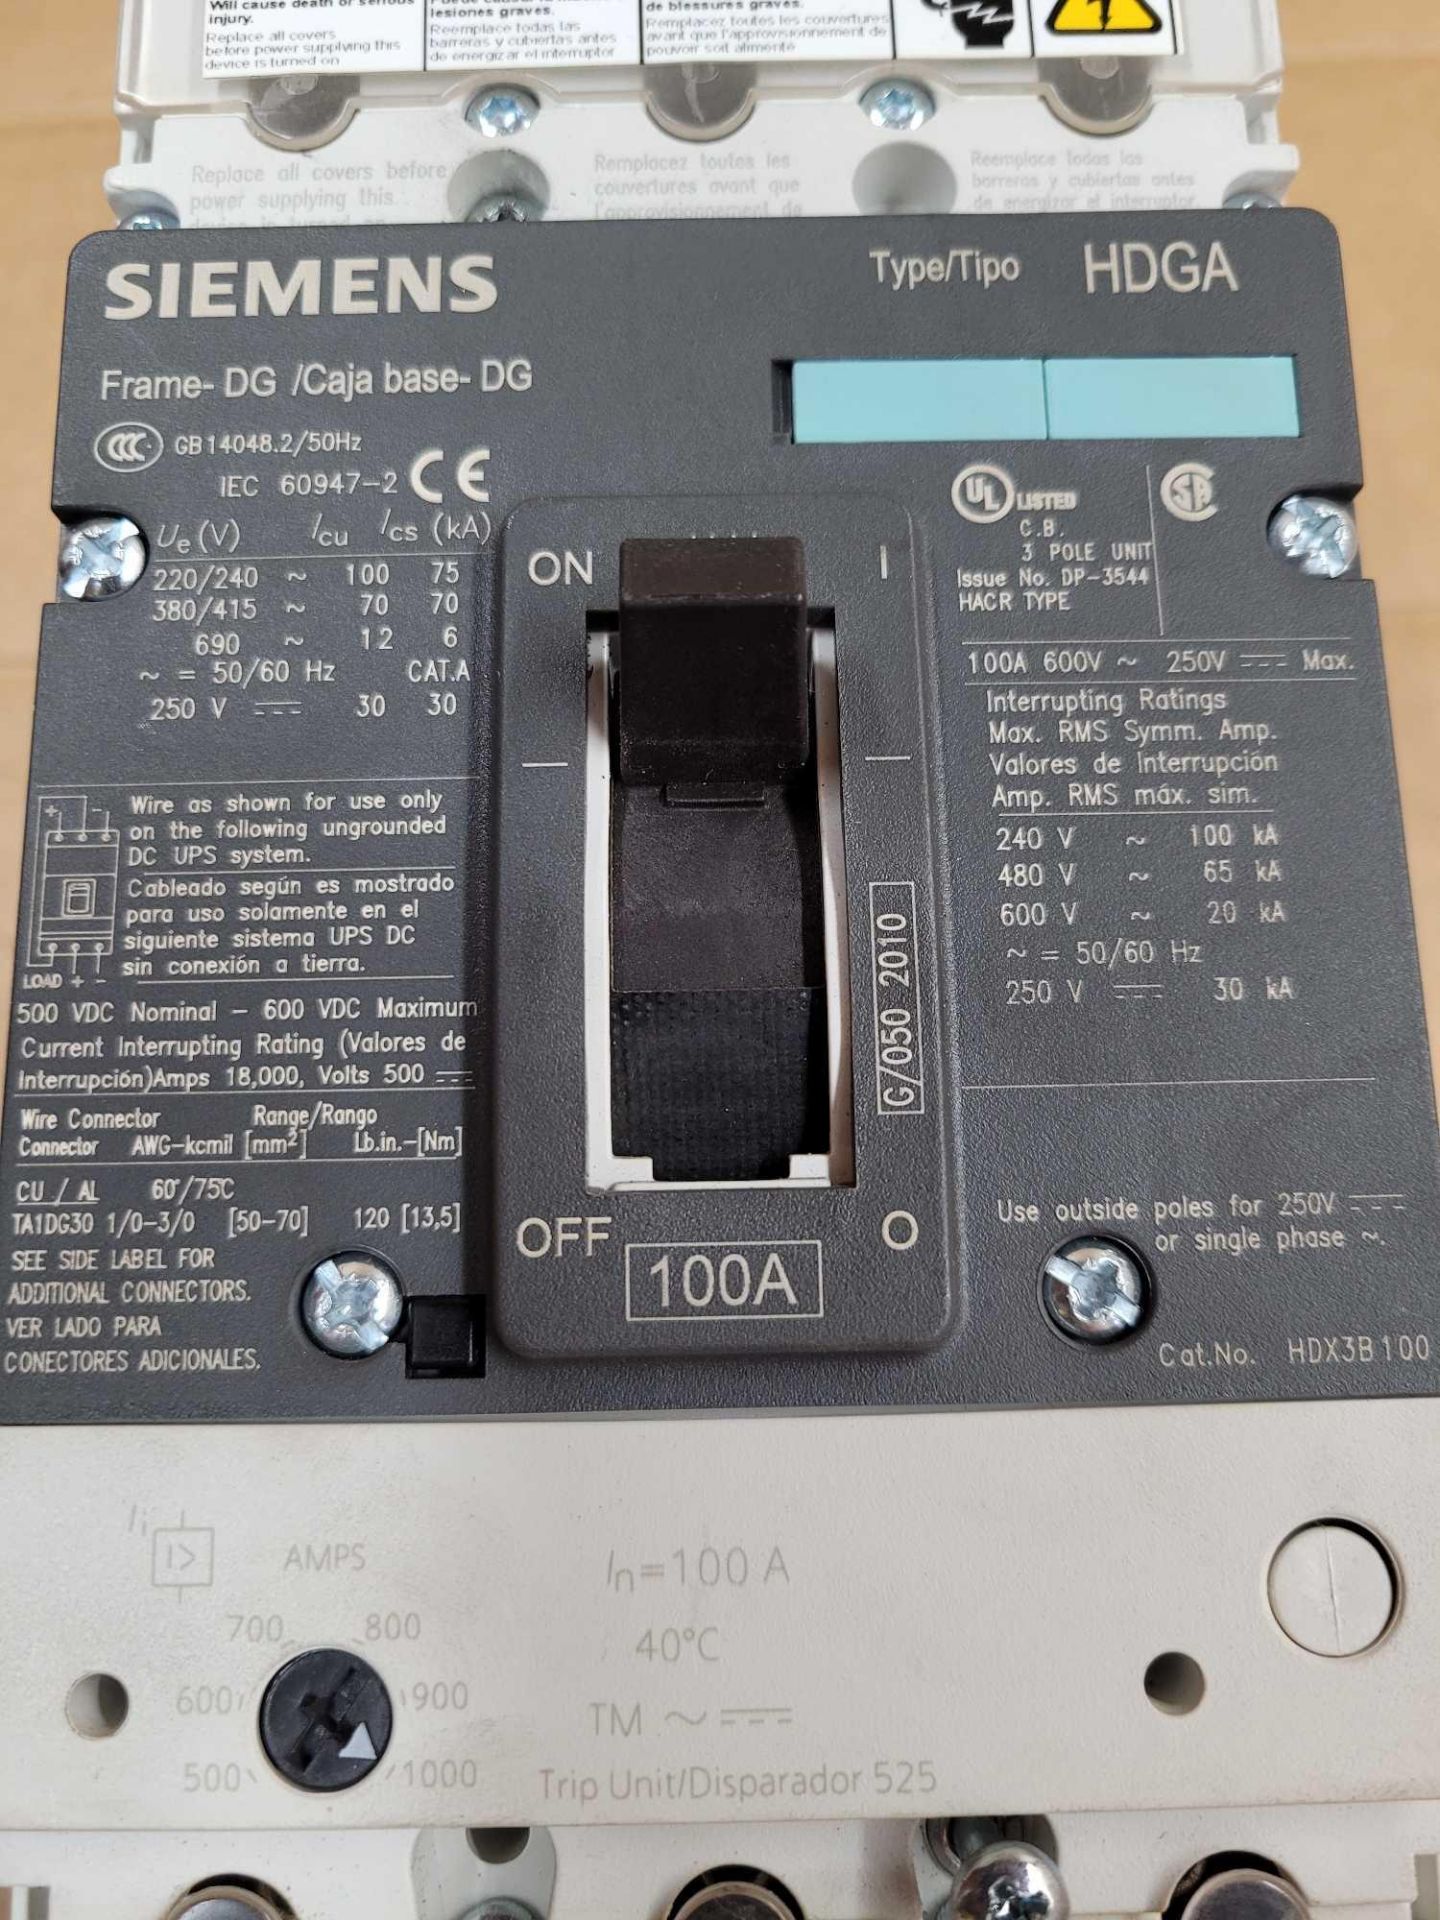 LOT OF 2 SIEMENS HDX3B100 / 100 Amp Circuit Breaker  /  Lot Weight: 9.6 lbs - Image 2 of 7